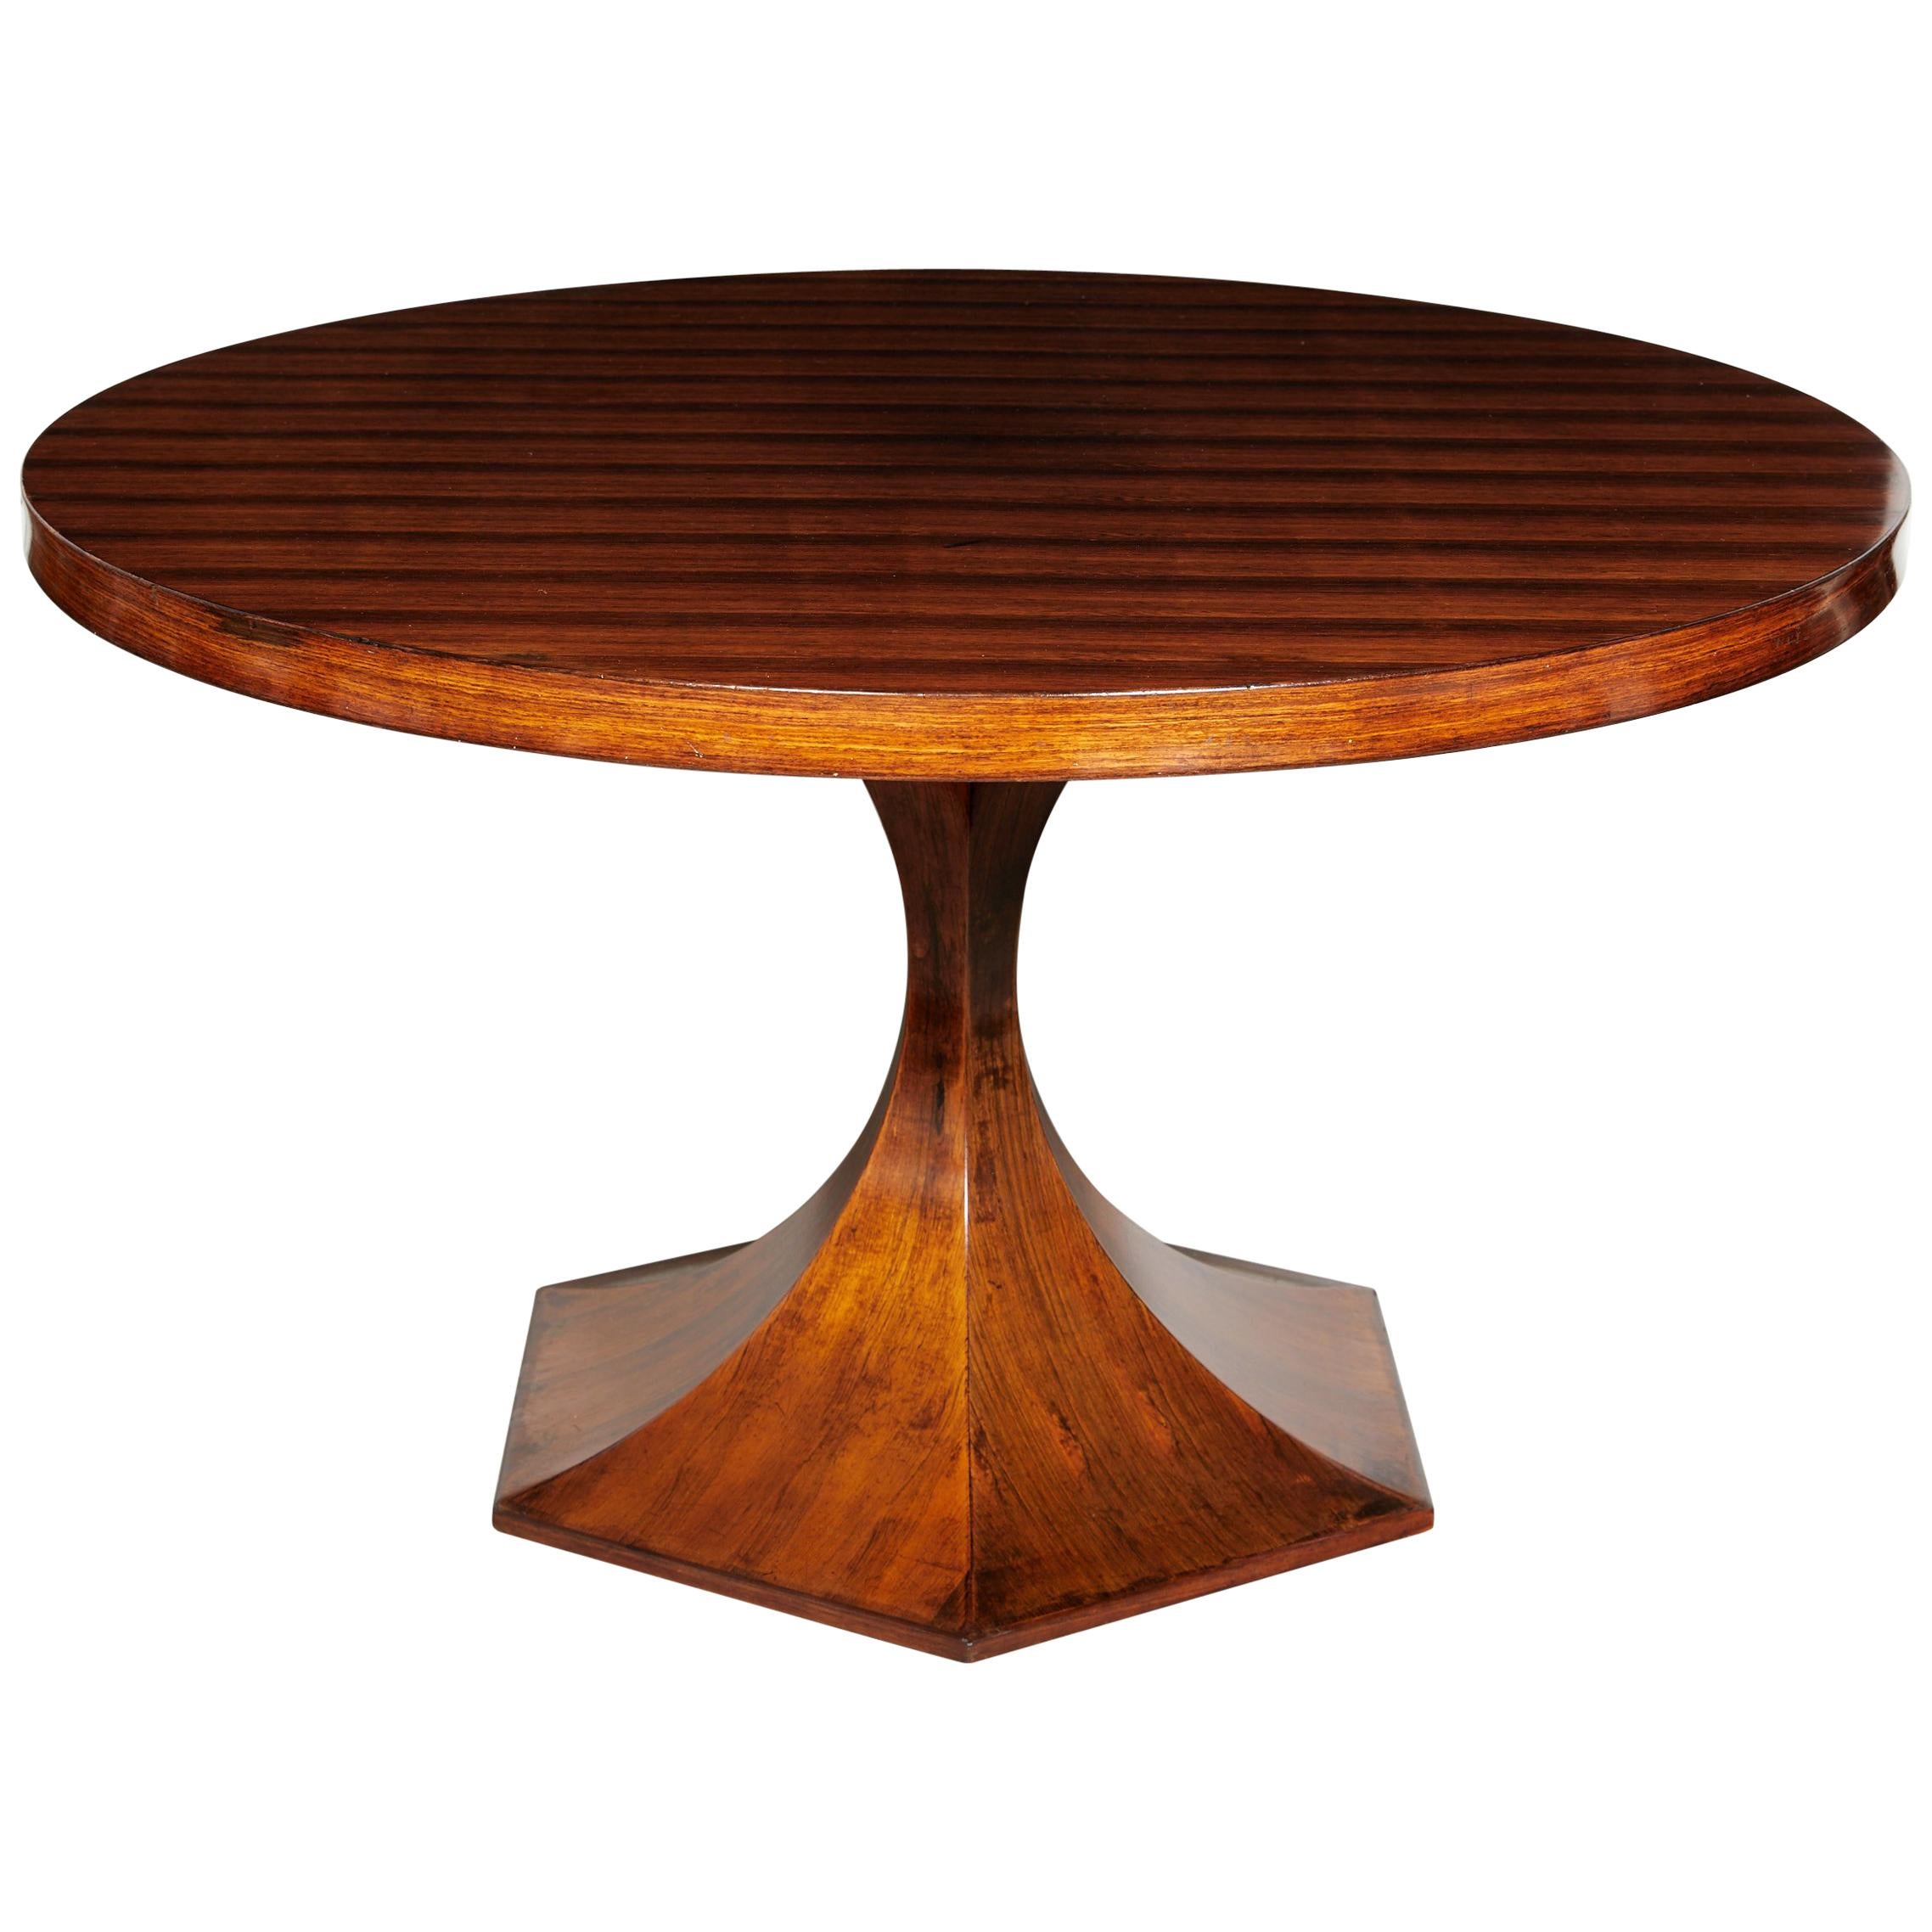 Italian Round Pedestal Dining Table of Palisander Wood